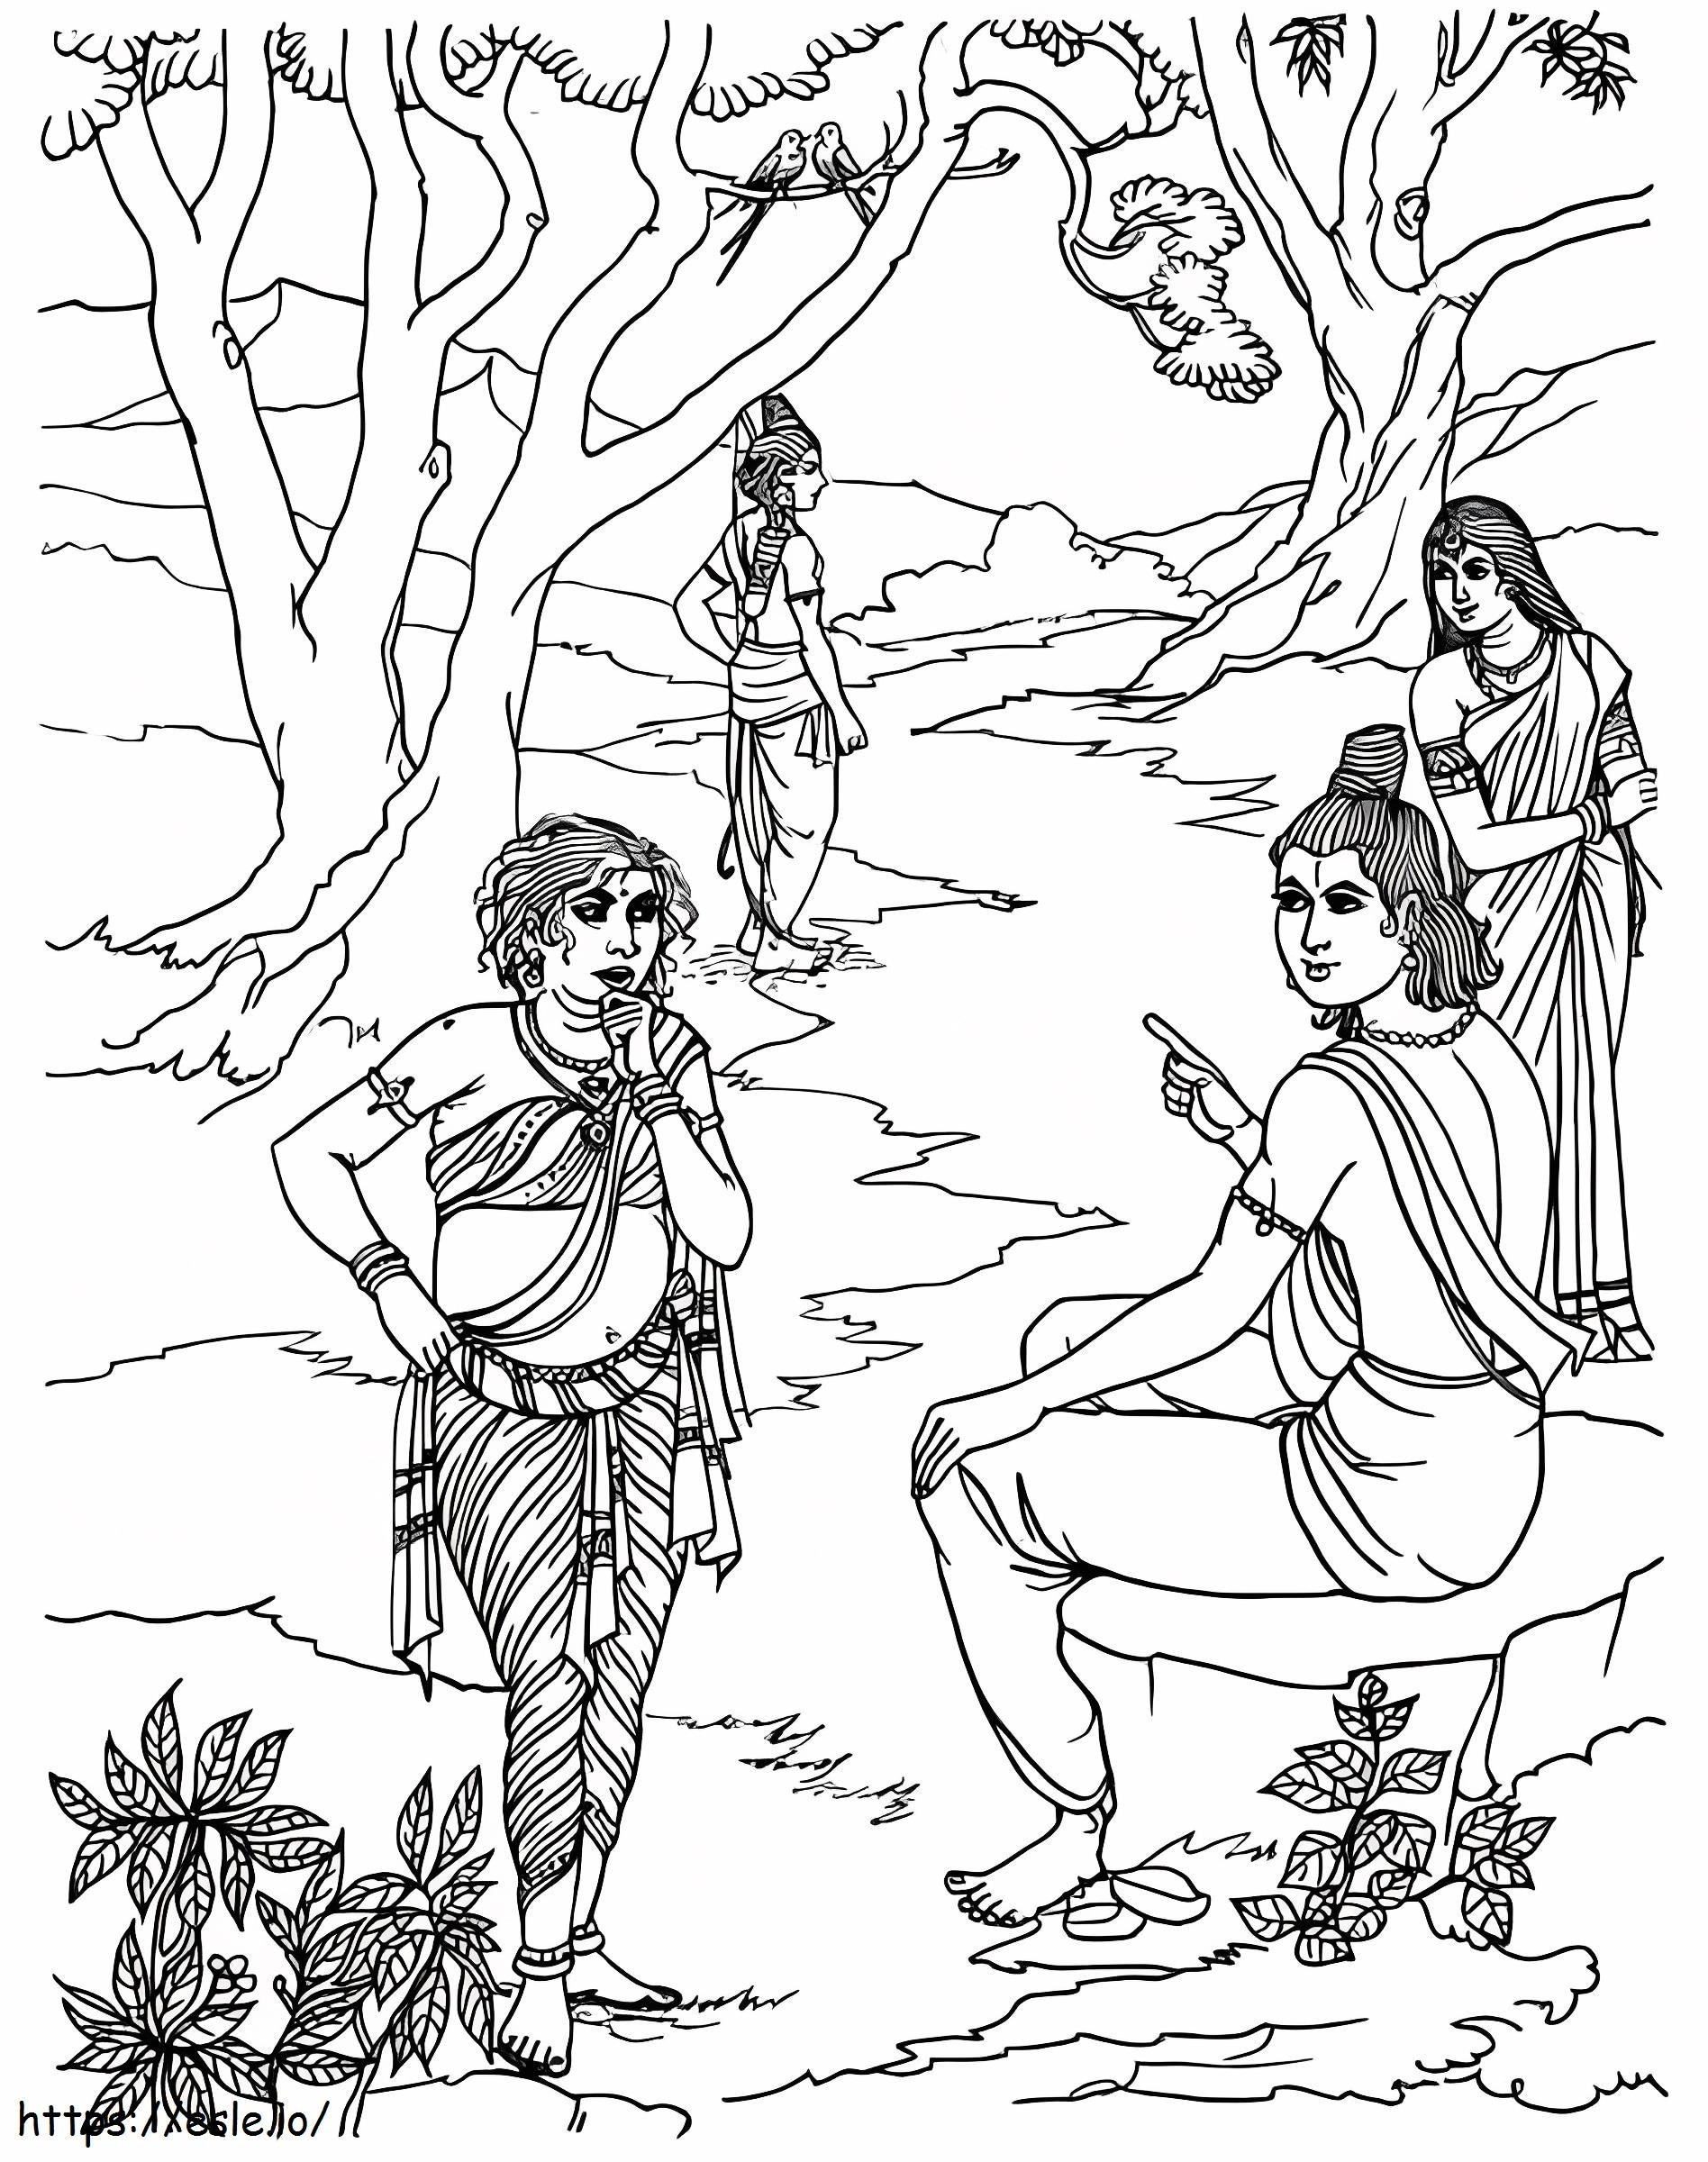 Kostenloses Ramayana ausmalbilder